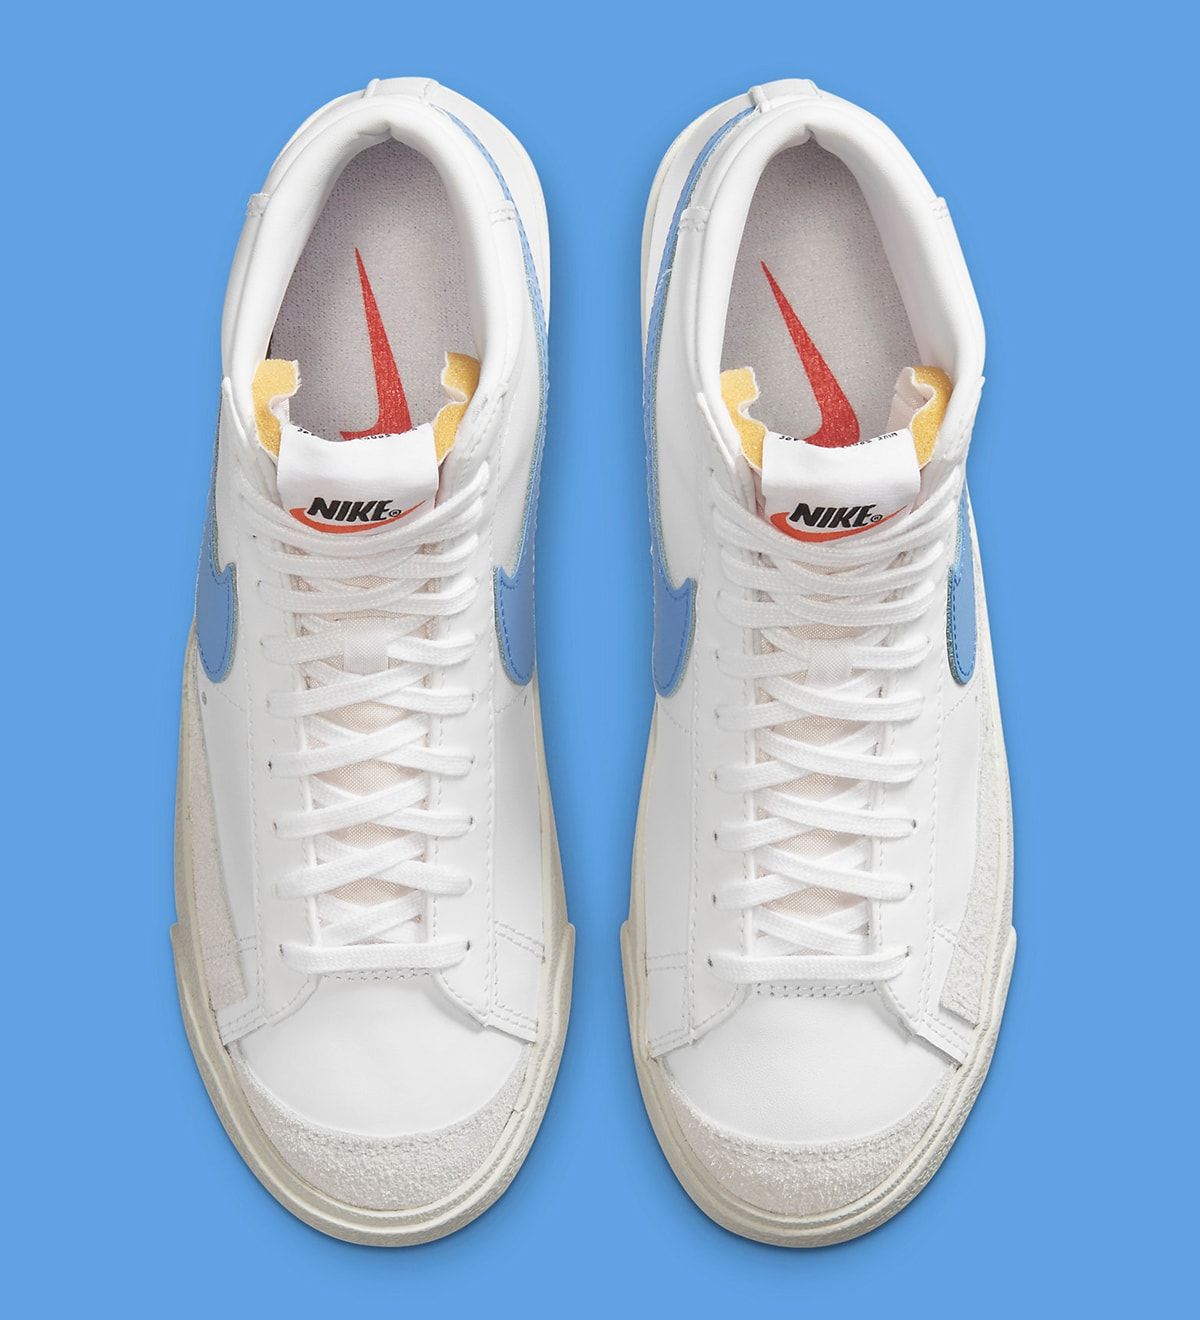 Nike Blazer Mid “Like Mike” is Landing Soon | LaptrinhX / News